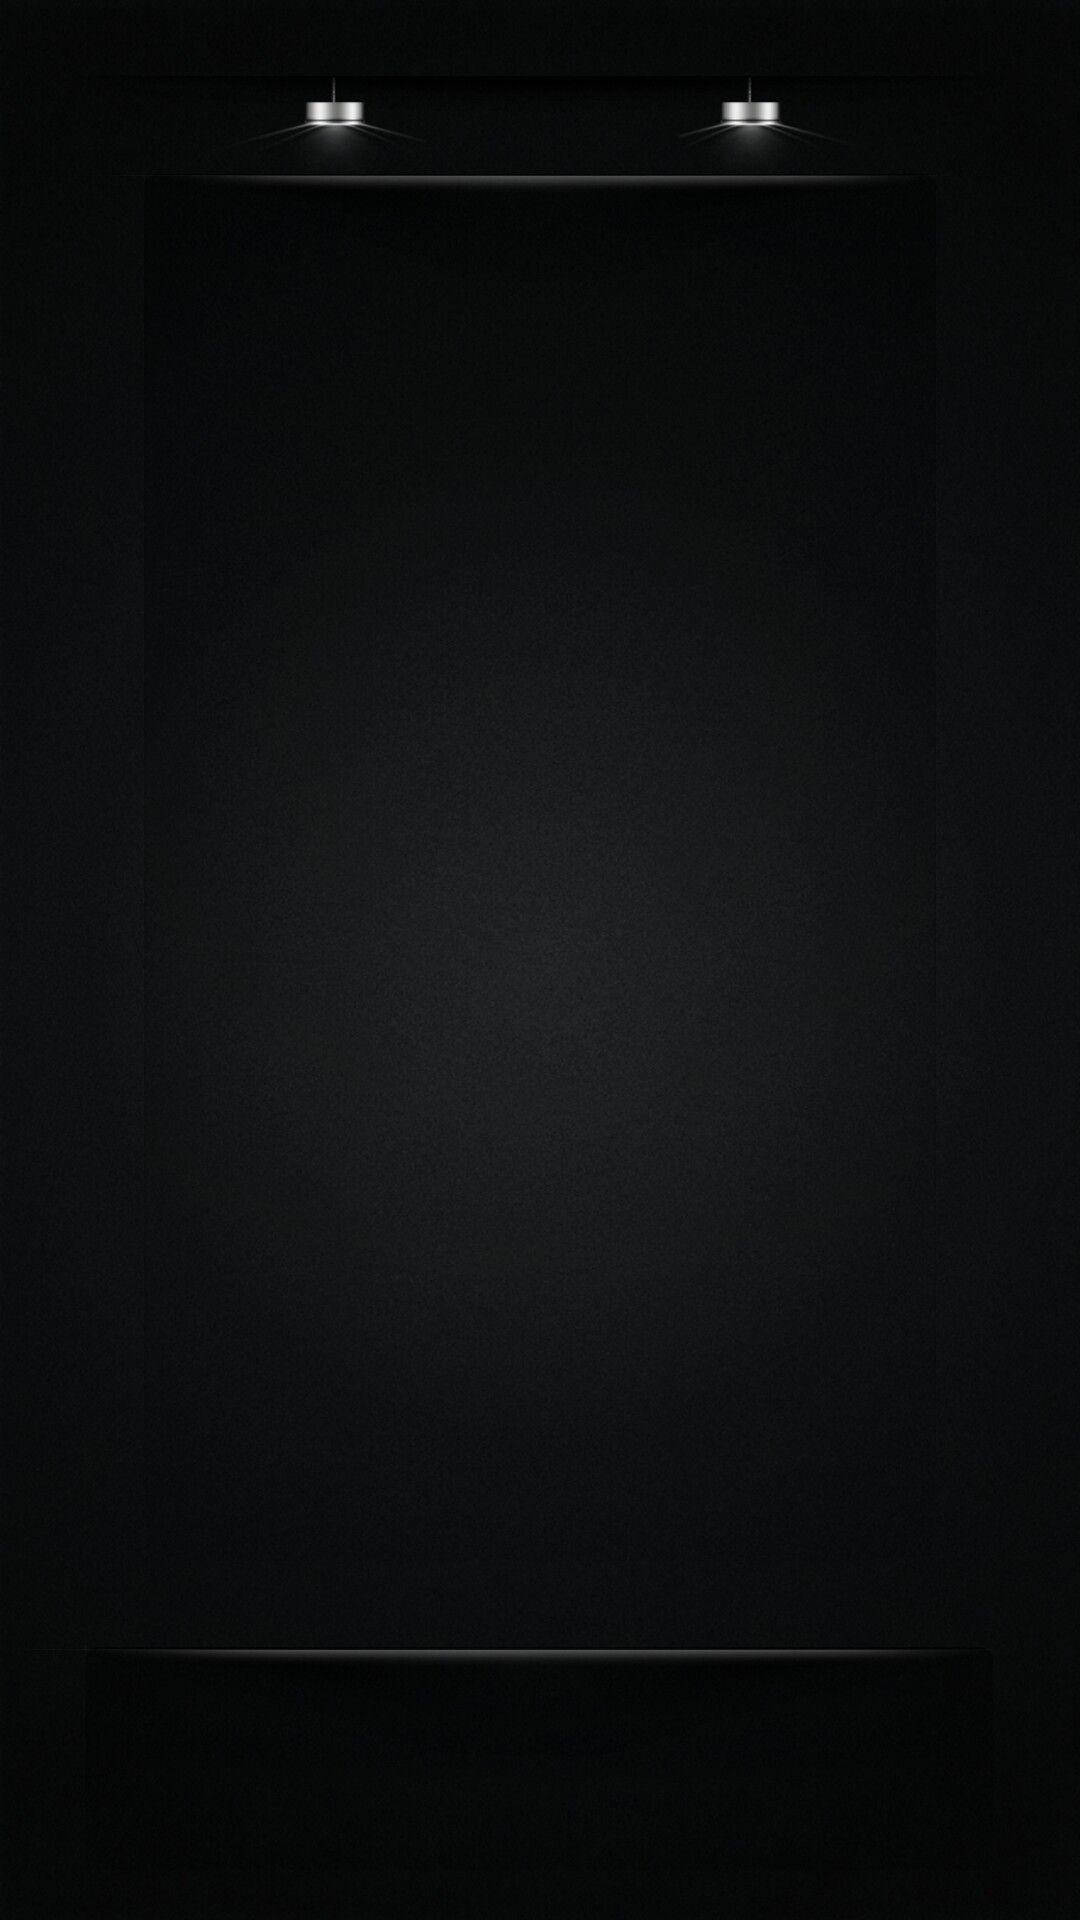 Dark Phone Canvas With Lights Wallpaper